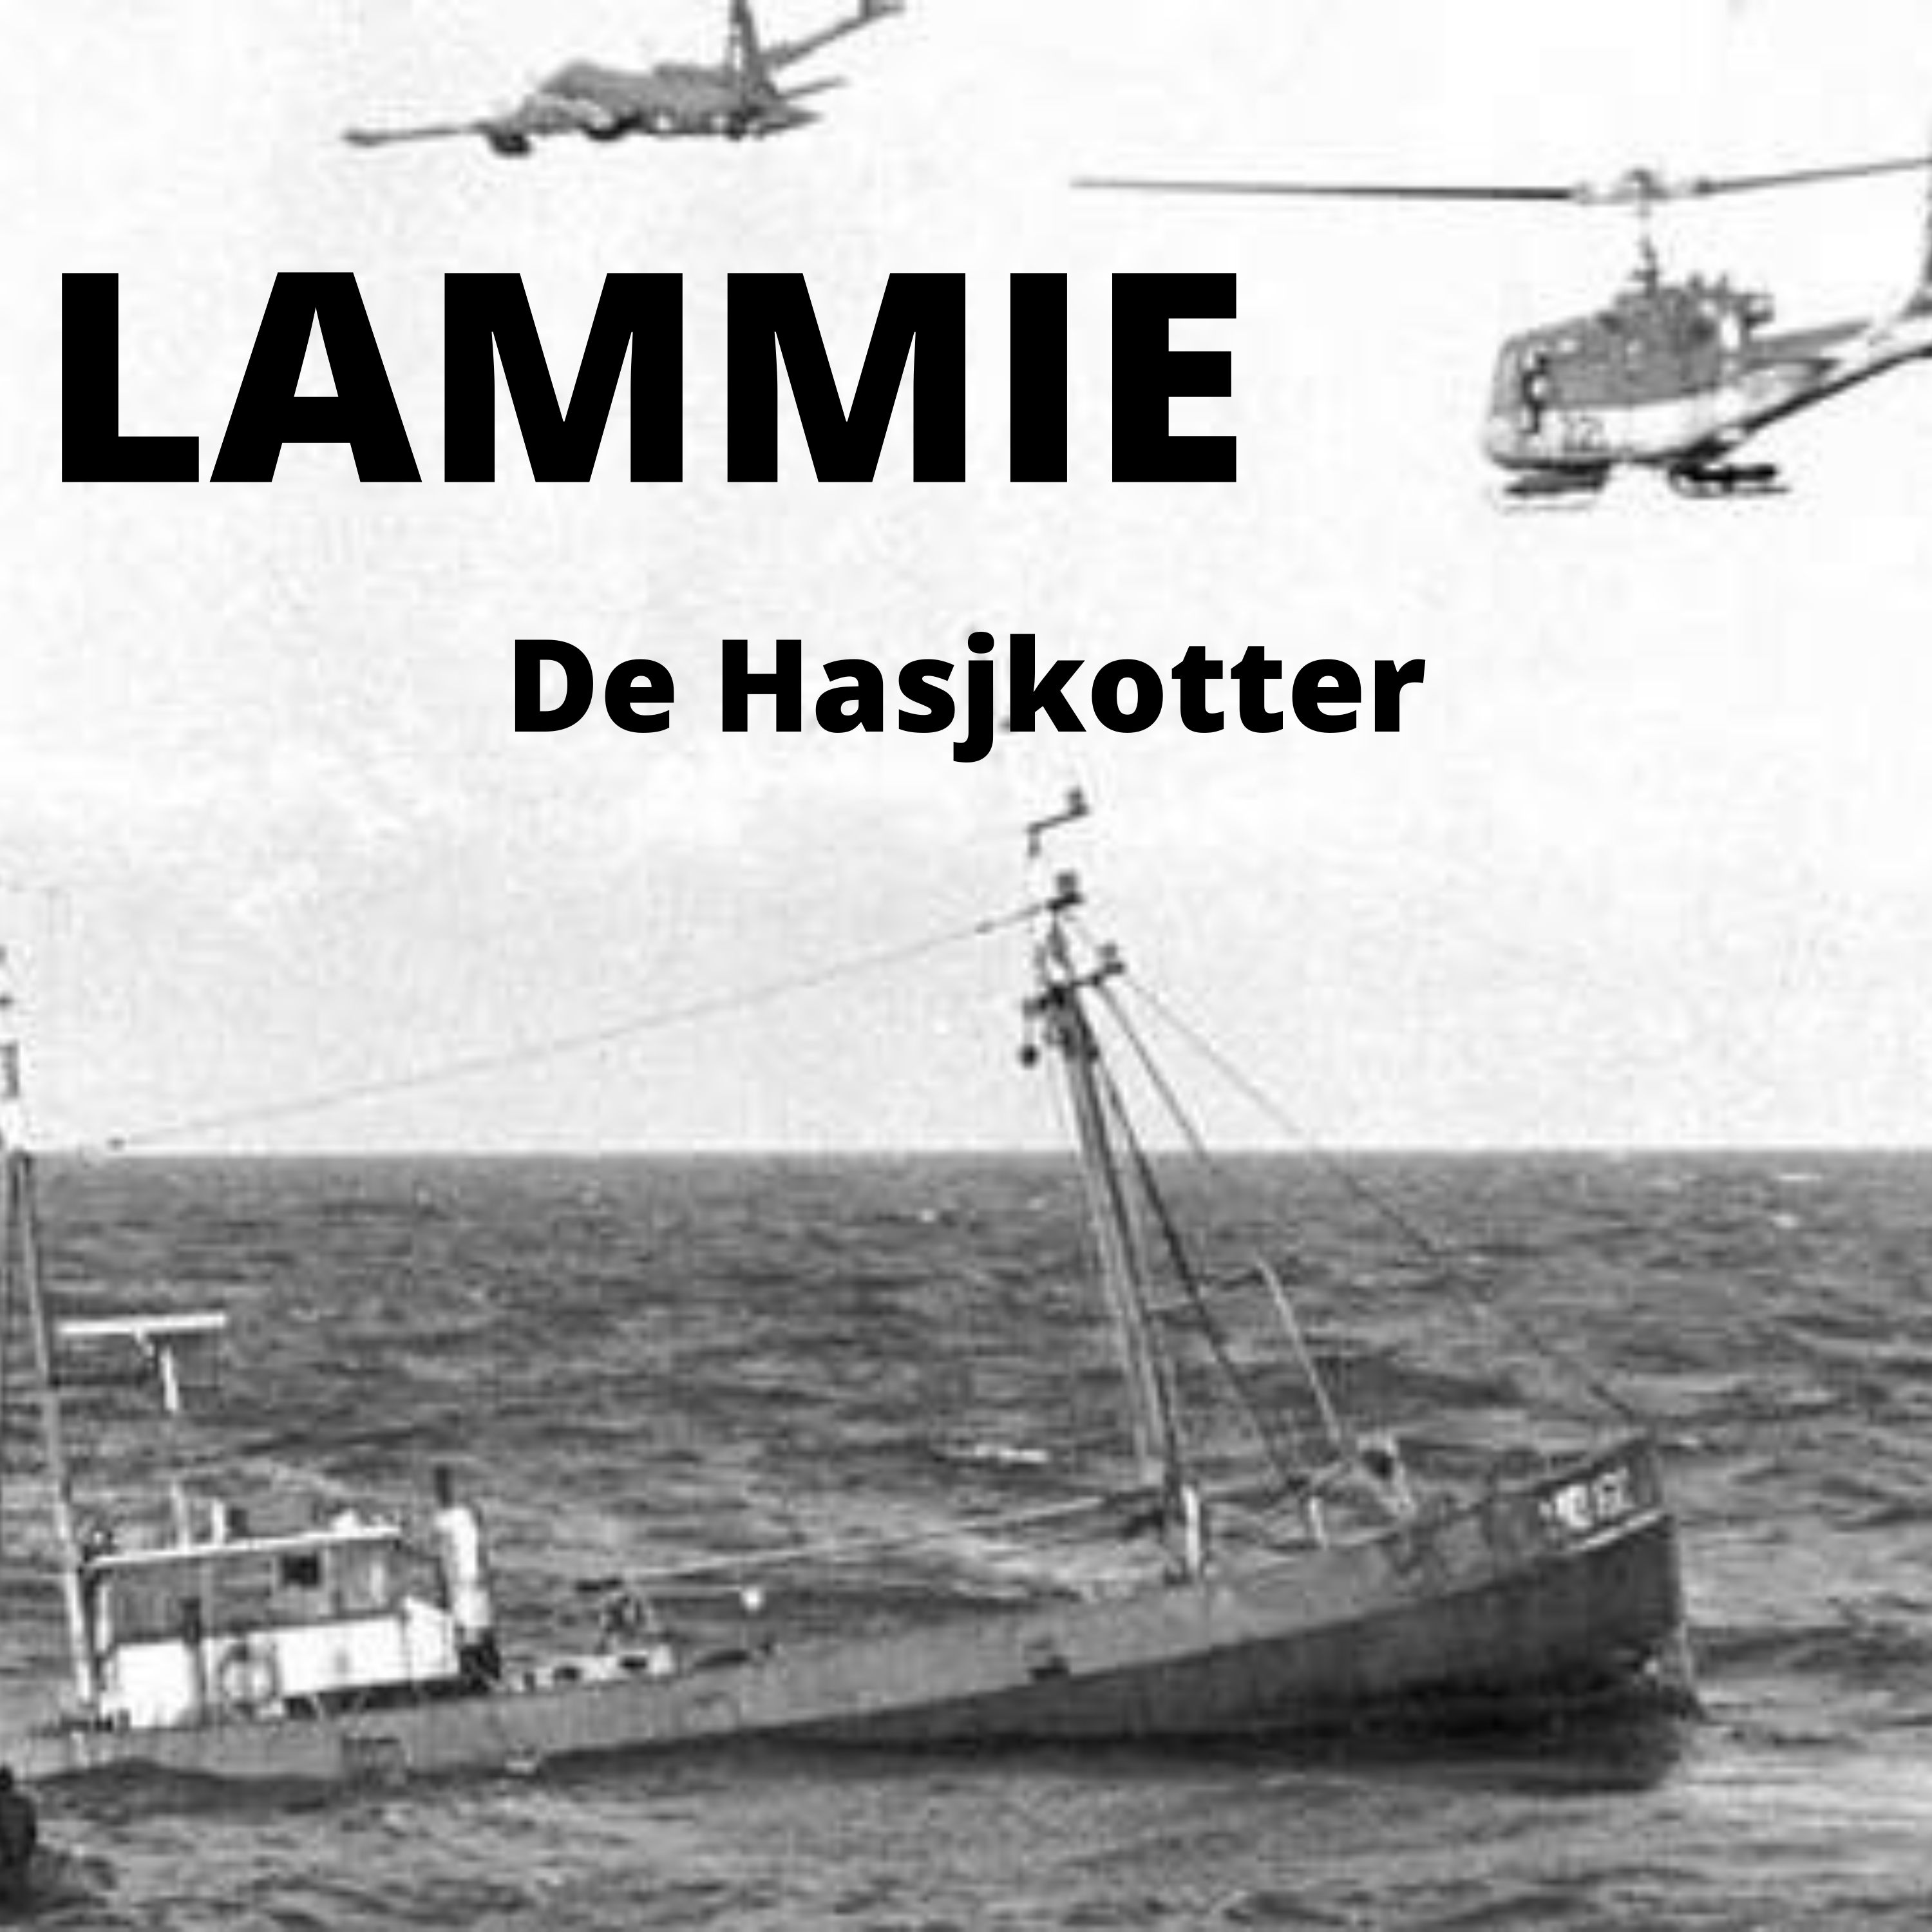 Artwork for LAMMIE, De Hasjkotter